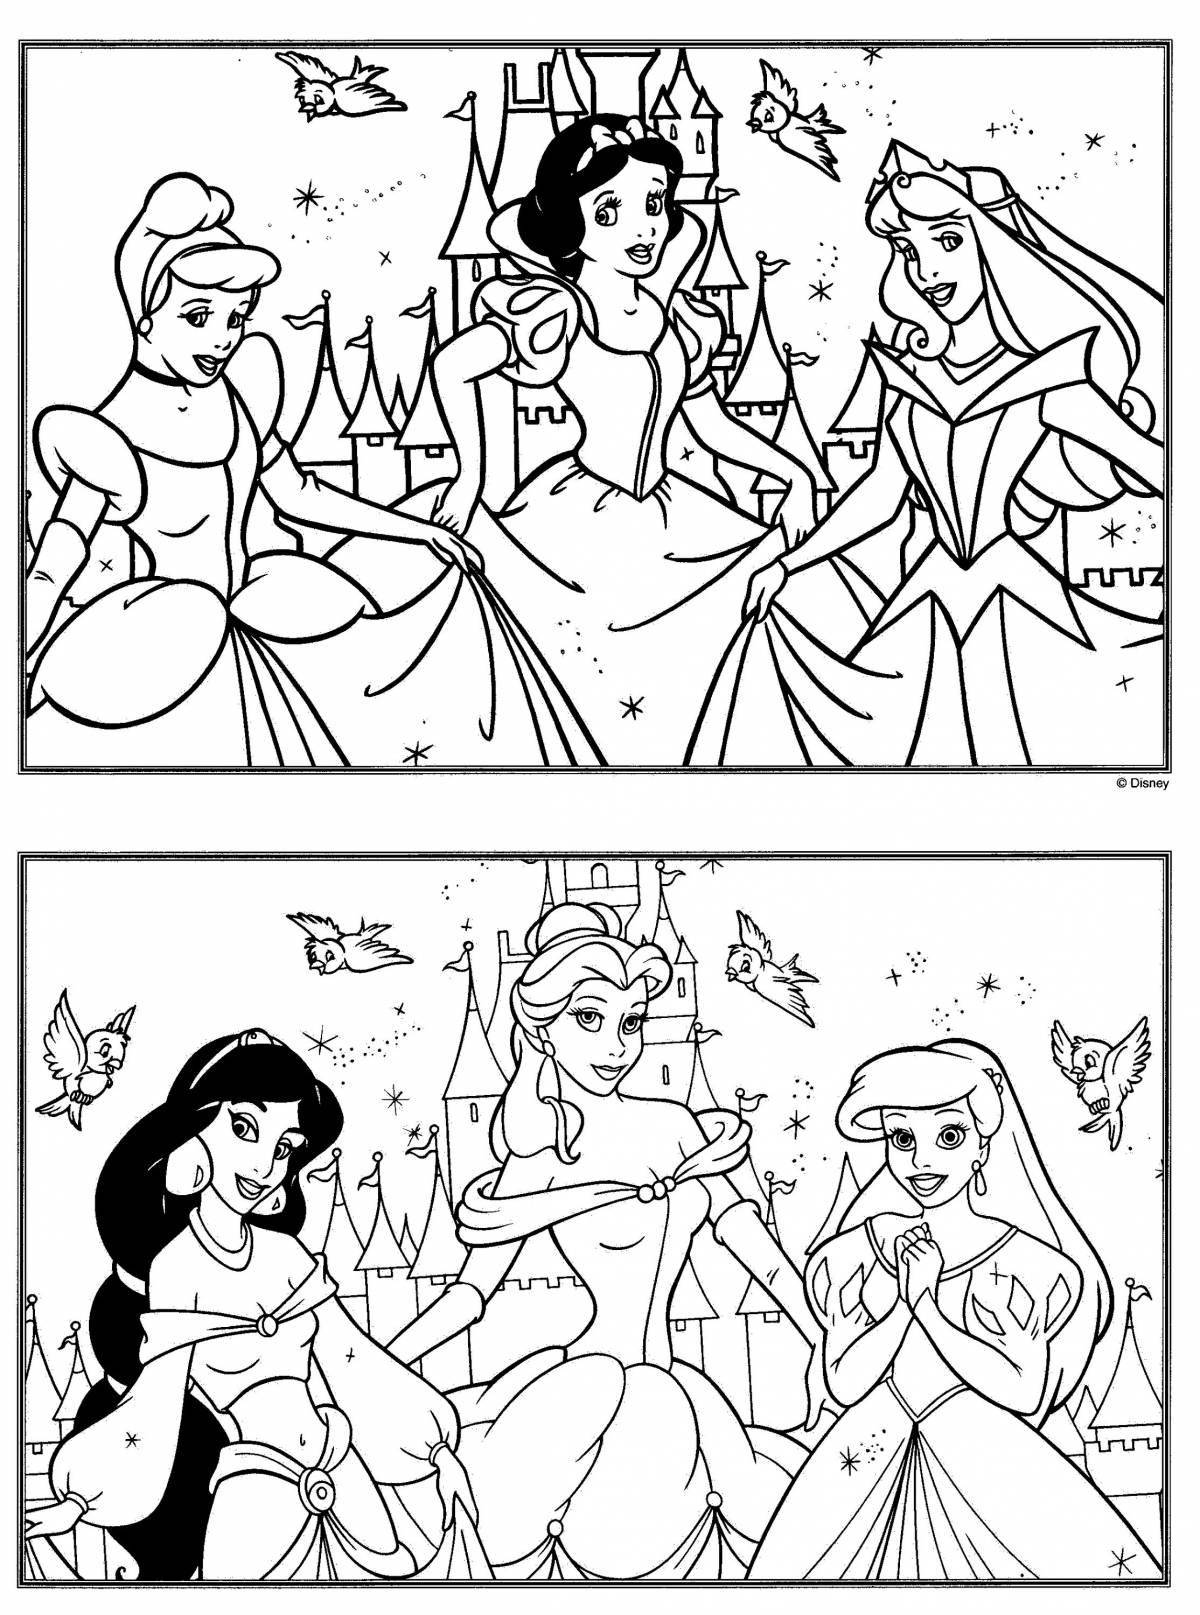 Vibrant coloring of all Disney princesses